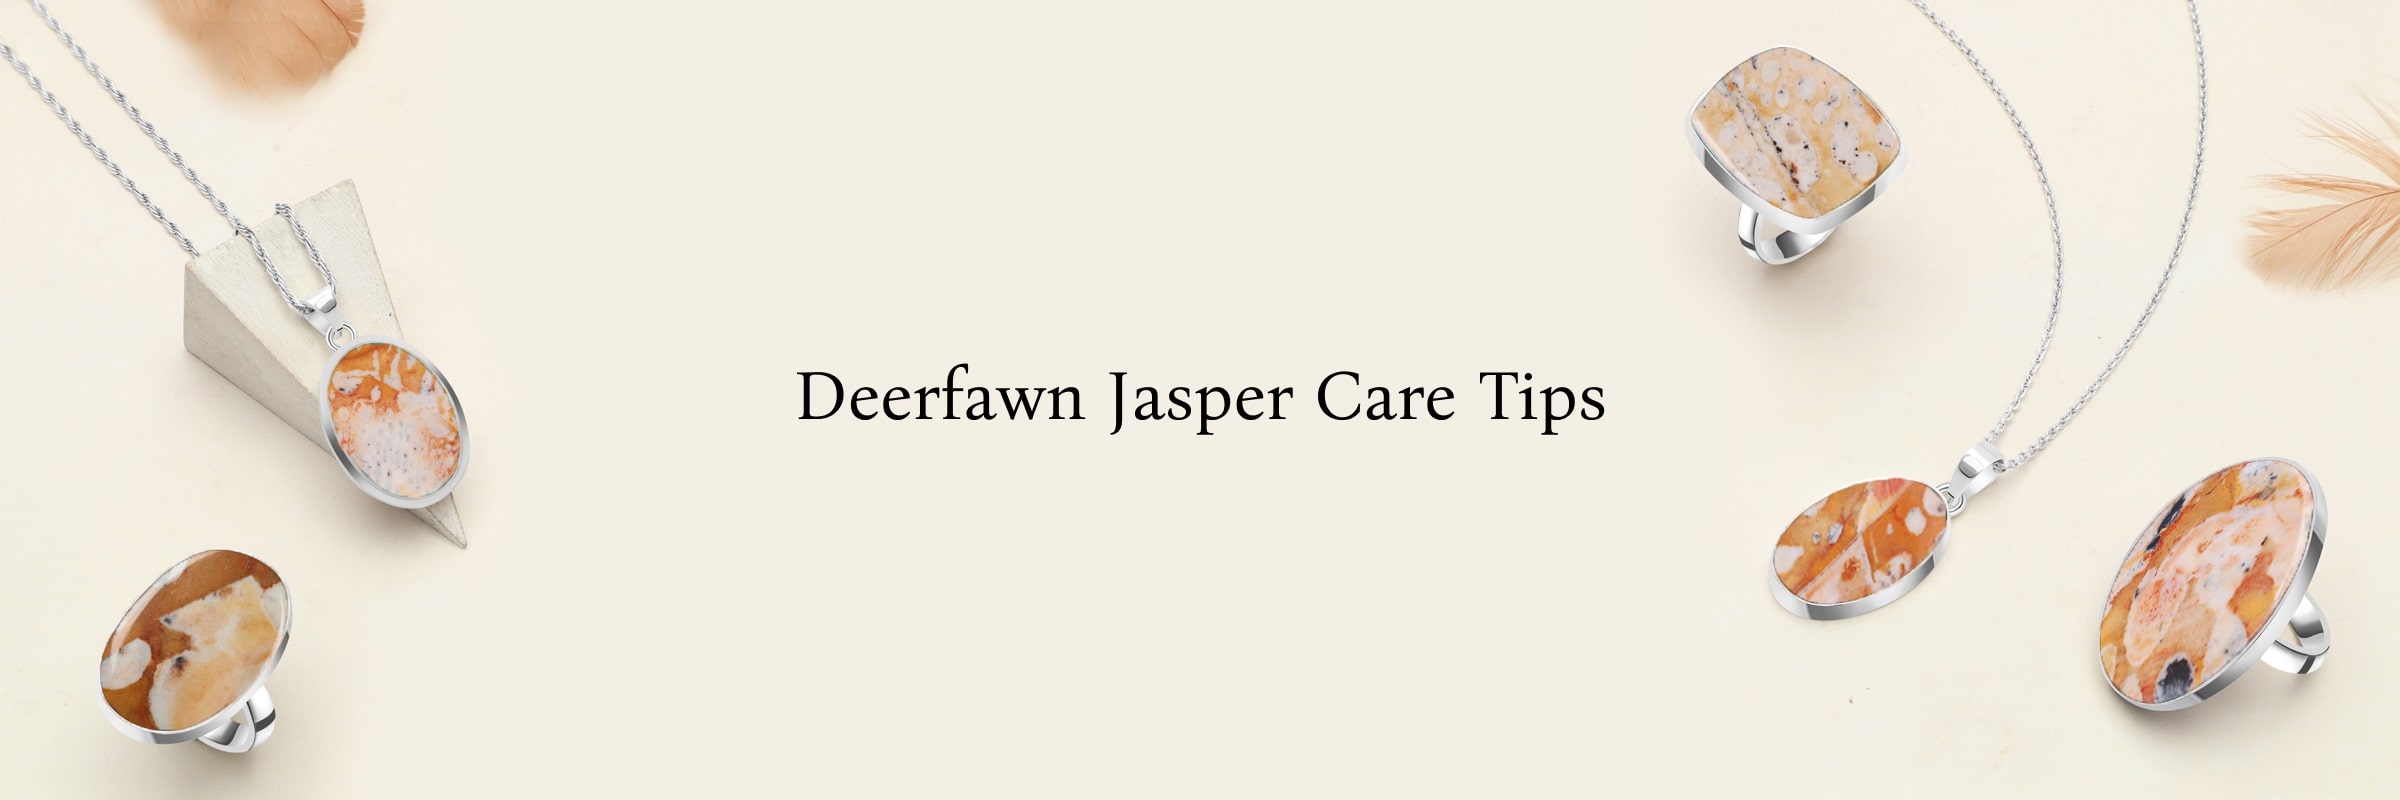 Caring For Your Deerfawn Jasper Jewel